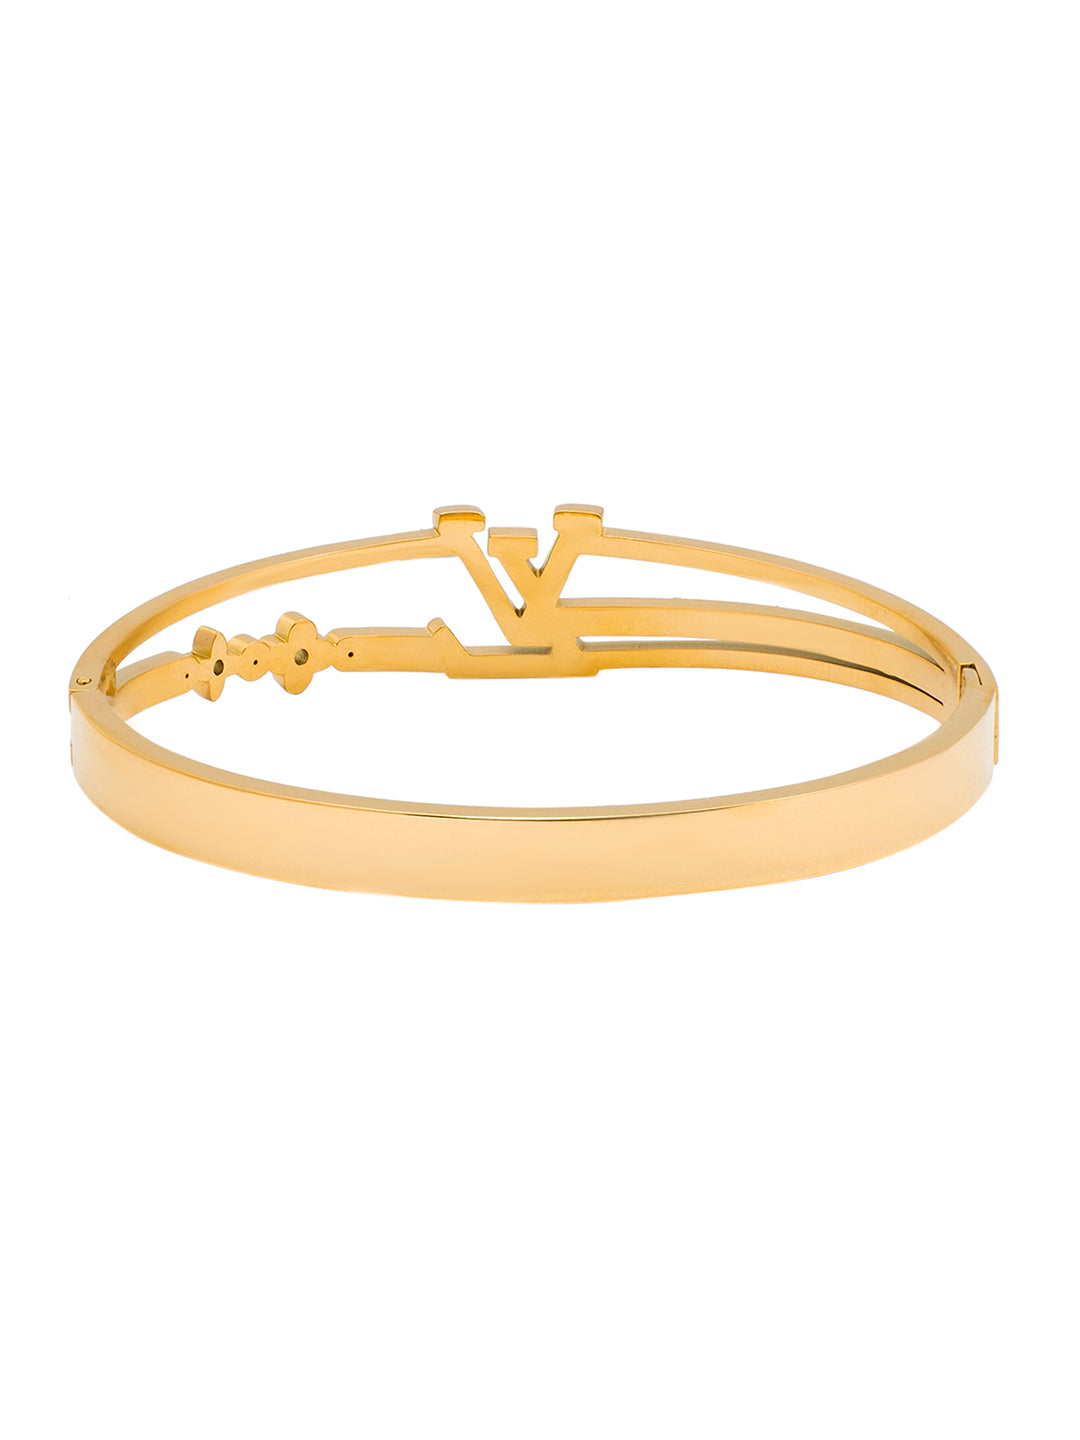 Louis Vuitton - Empreinte Chain Bracelet Yellow Gold - Gold - Unisex - Luxury